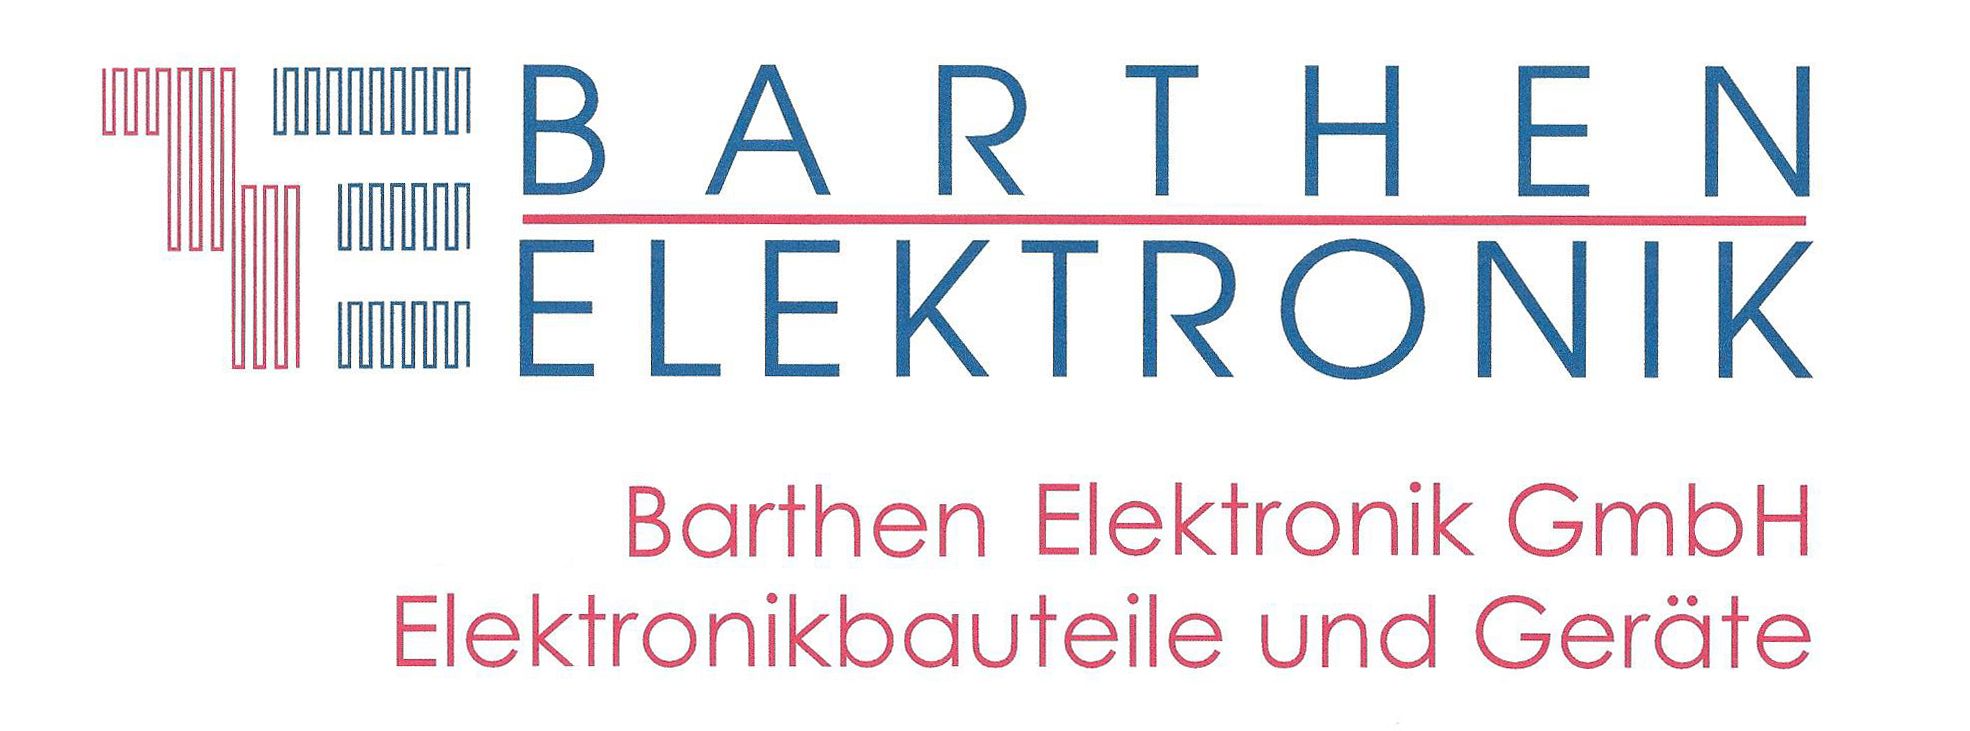 Barthen Elektronik